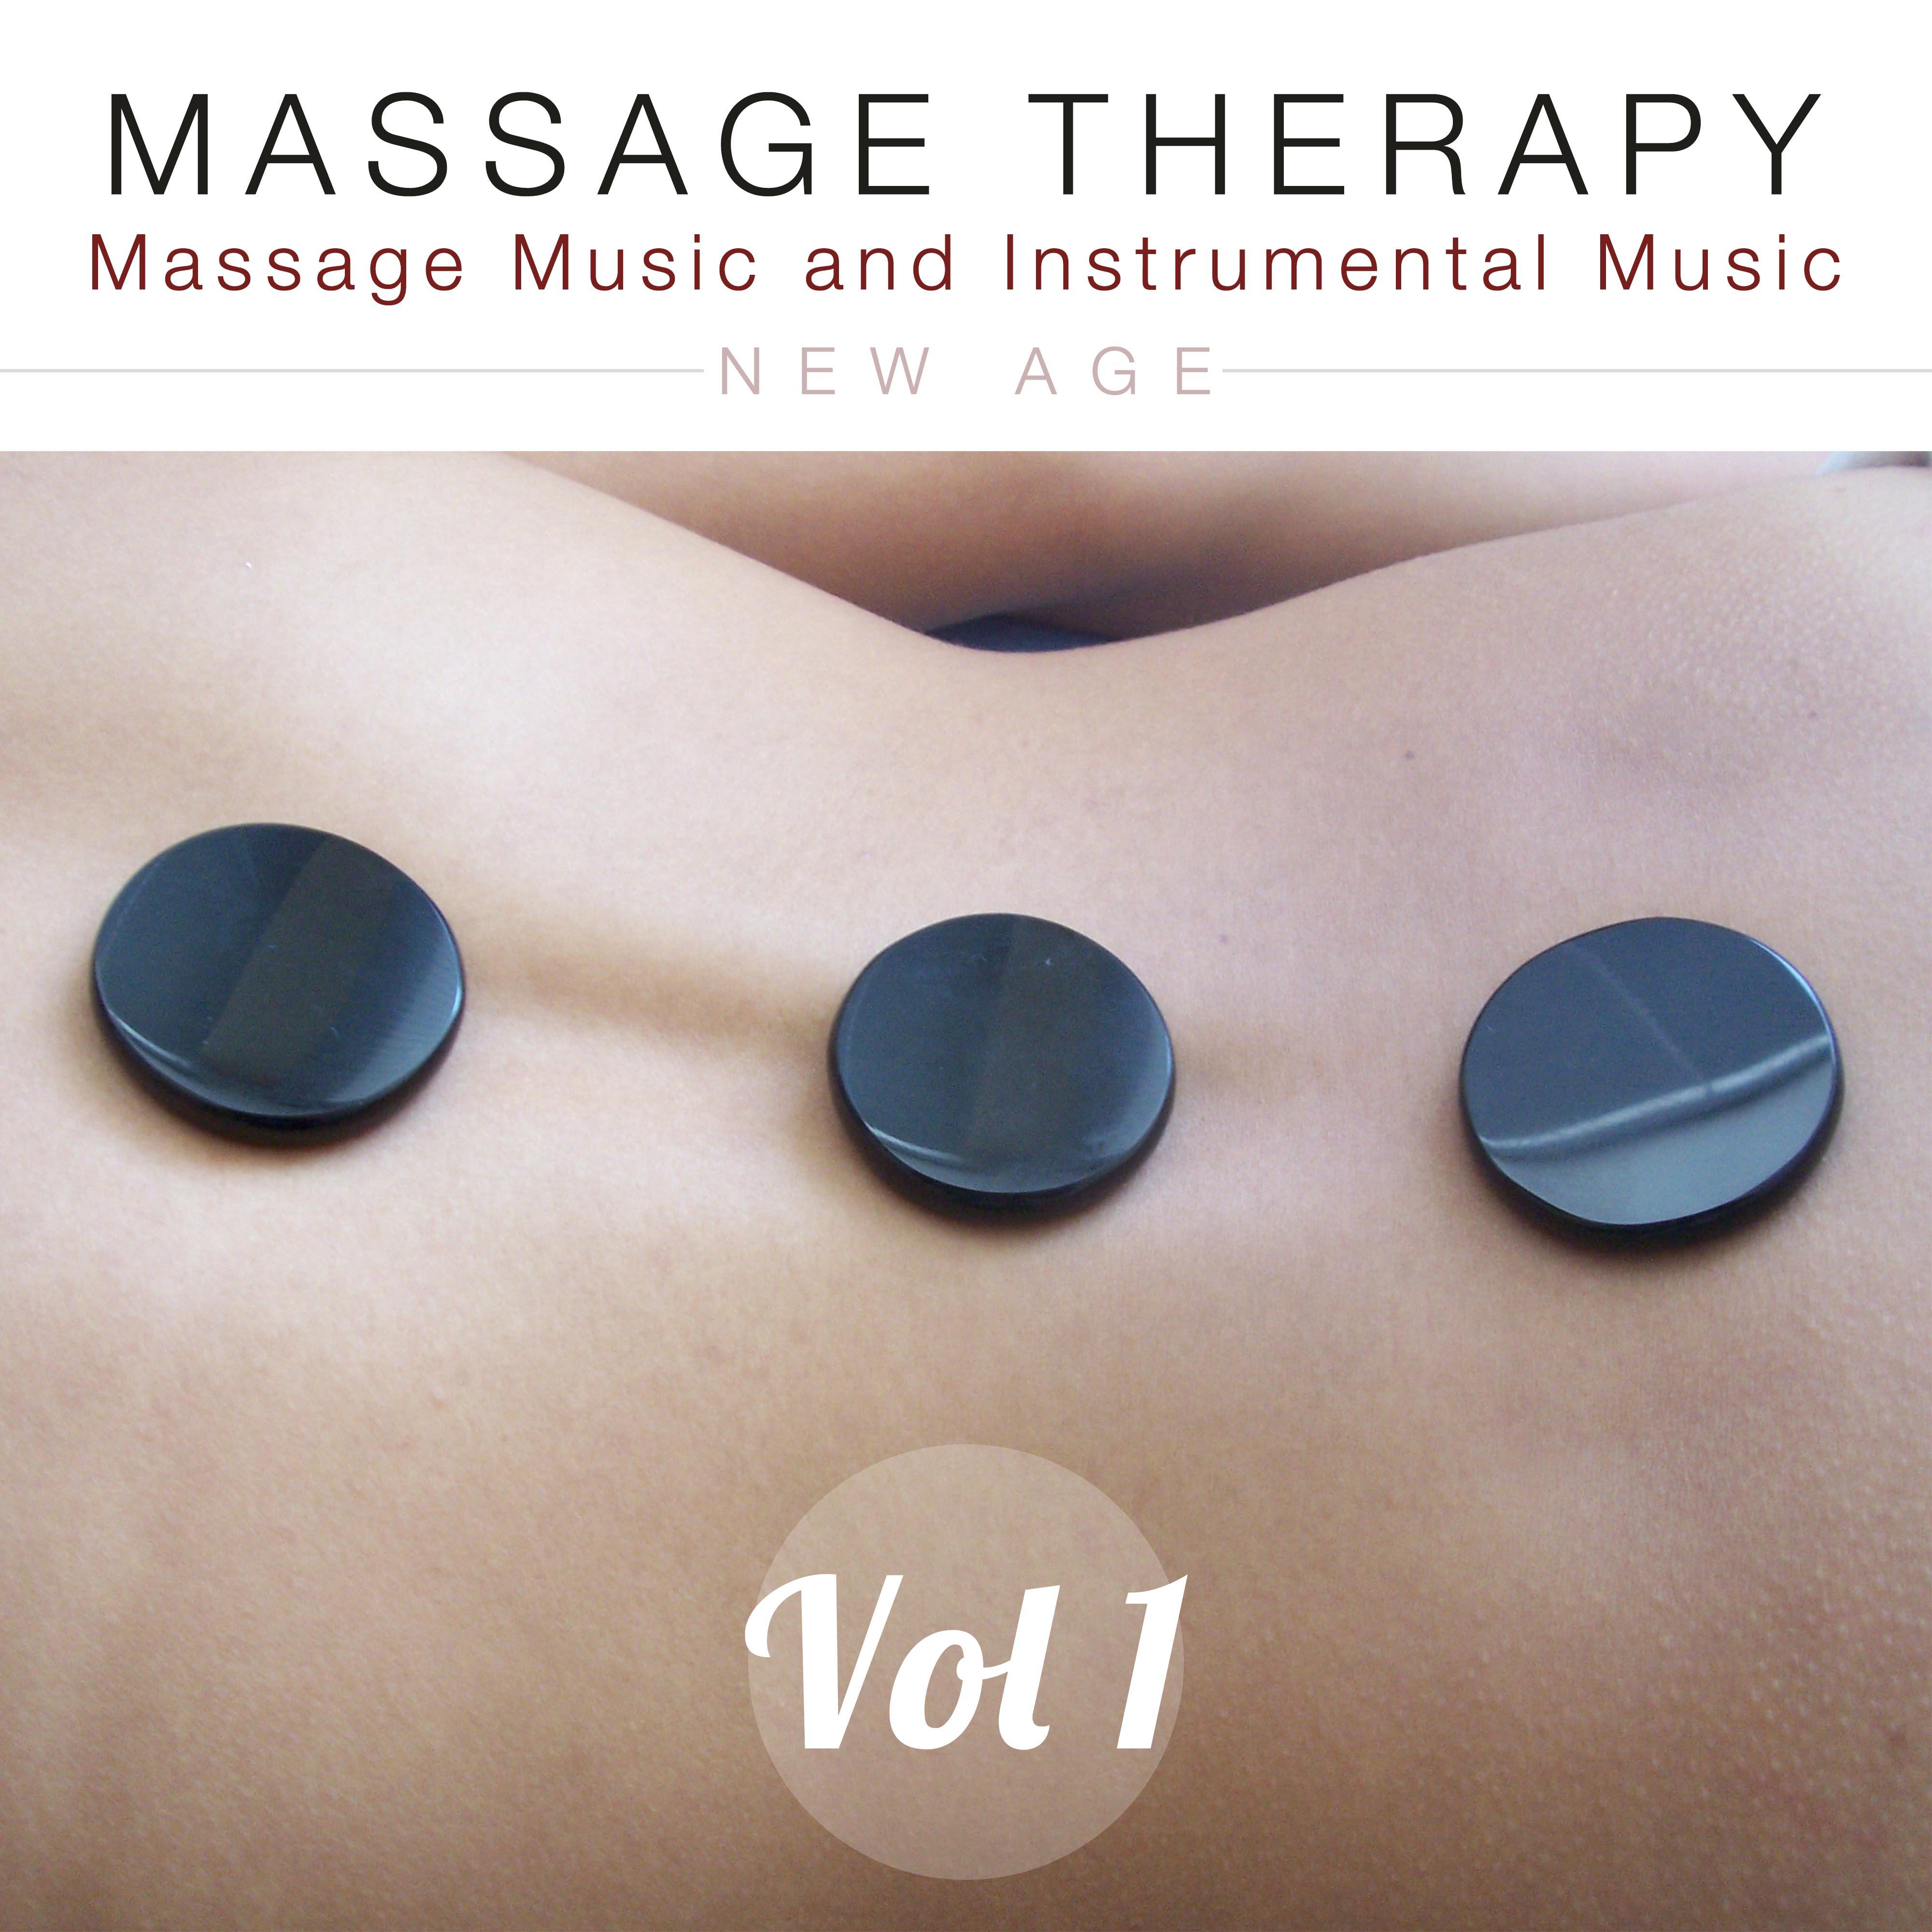 Massage Therapy Vol 1 - Massage Music and Instrumental Music to Help you Relax for Swedish Massage, Sensual Massage, Asian Massage and Body Treatments